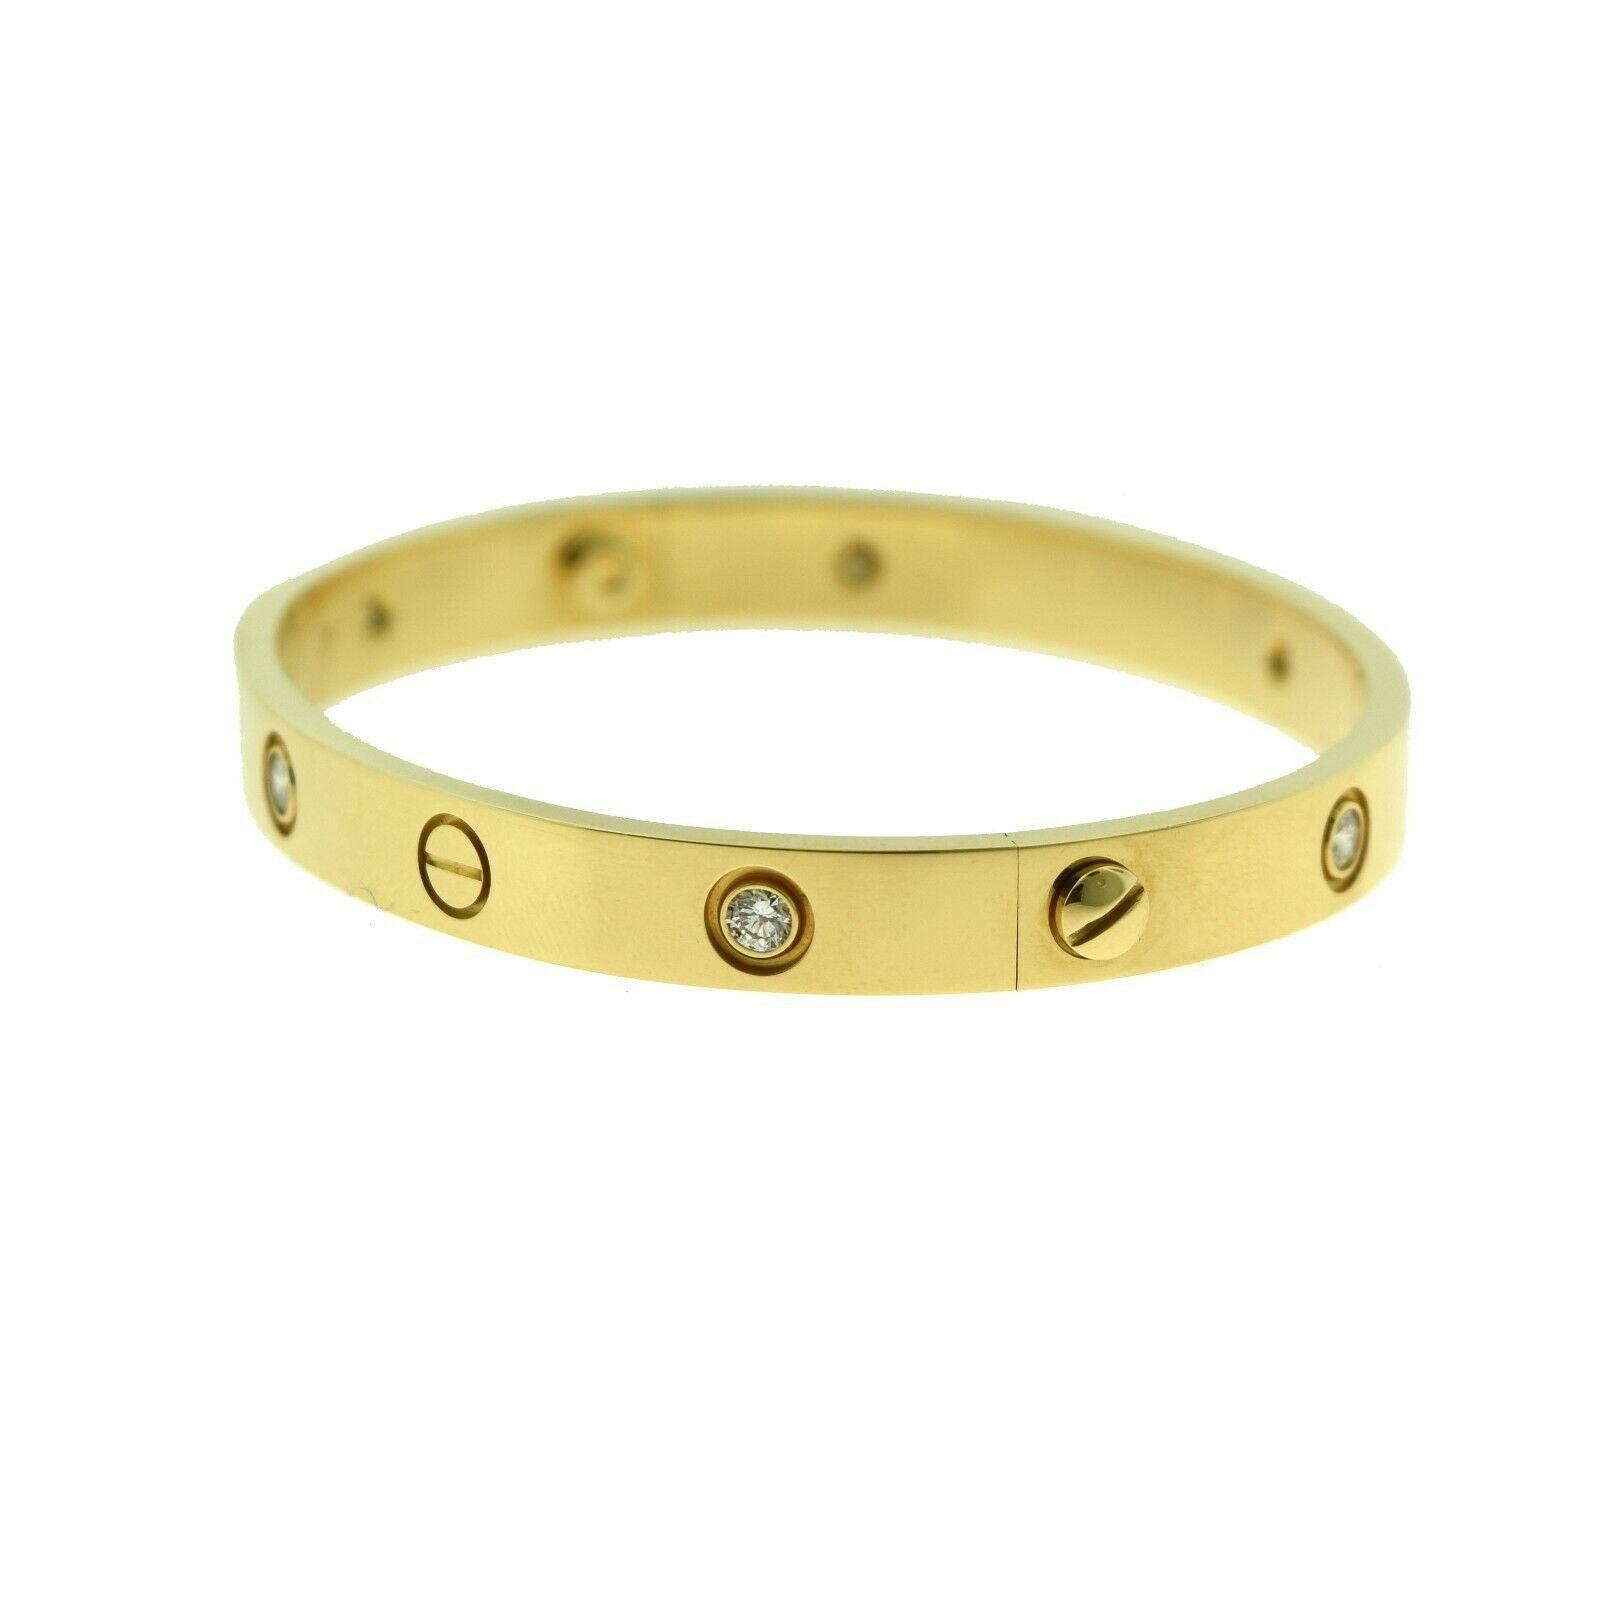 Designer: Cartier

Collection: Love

Style: Bangle Bracelet

Metal: Yellow Gold

Metal Purity: 18k

Bracelet Size: 17 = 17 cm

Stones: 6 Round Brilliant Cut Diamonds

Hallmarks: 17, Au750 Cartier, Serial No., 

Screw System: 